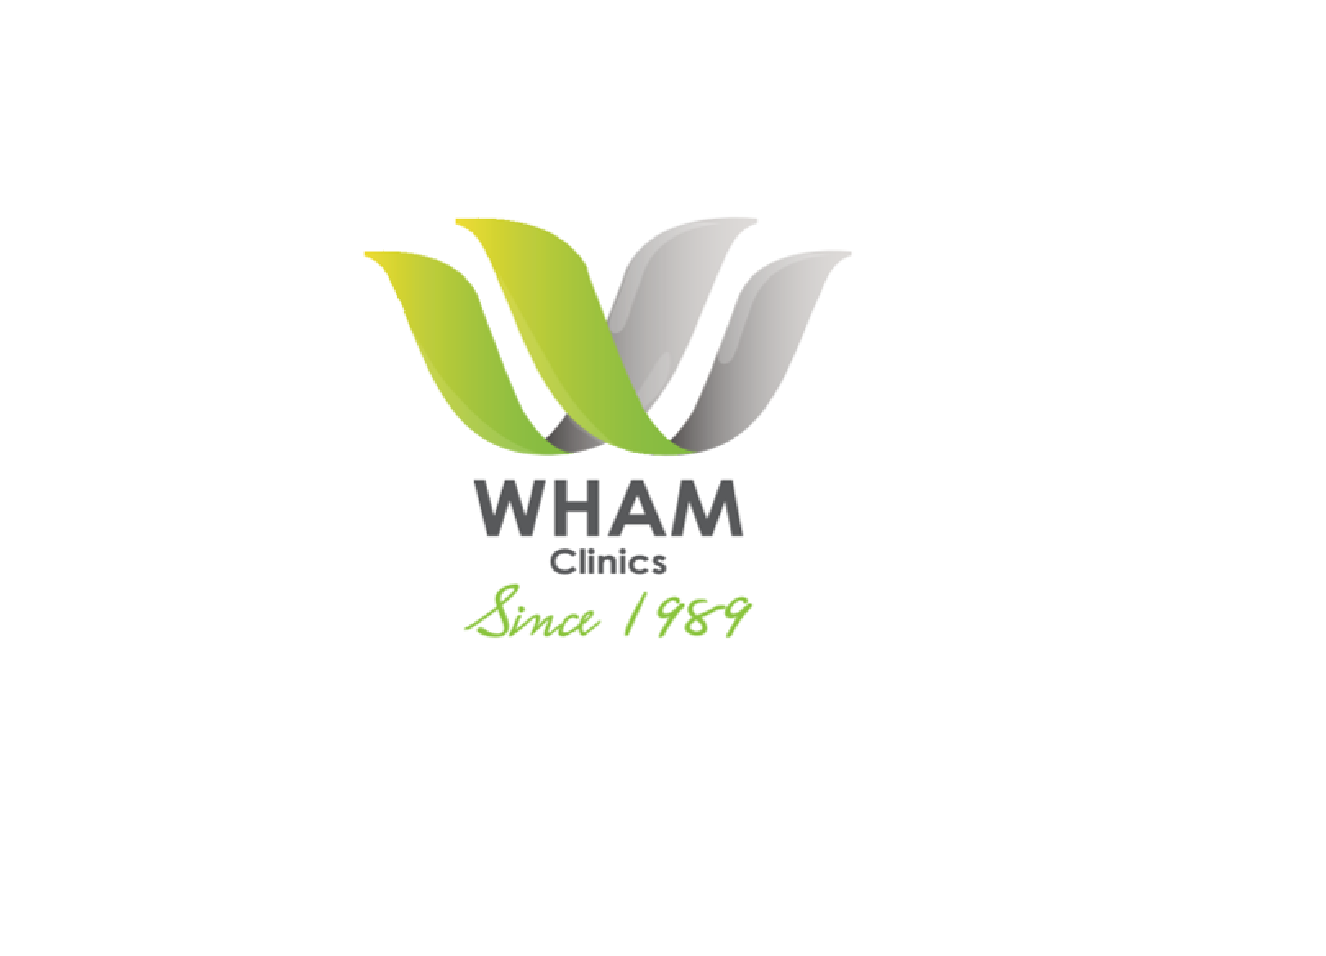 Wham Clinics